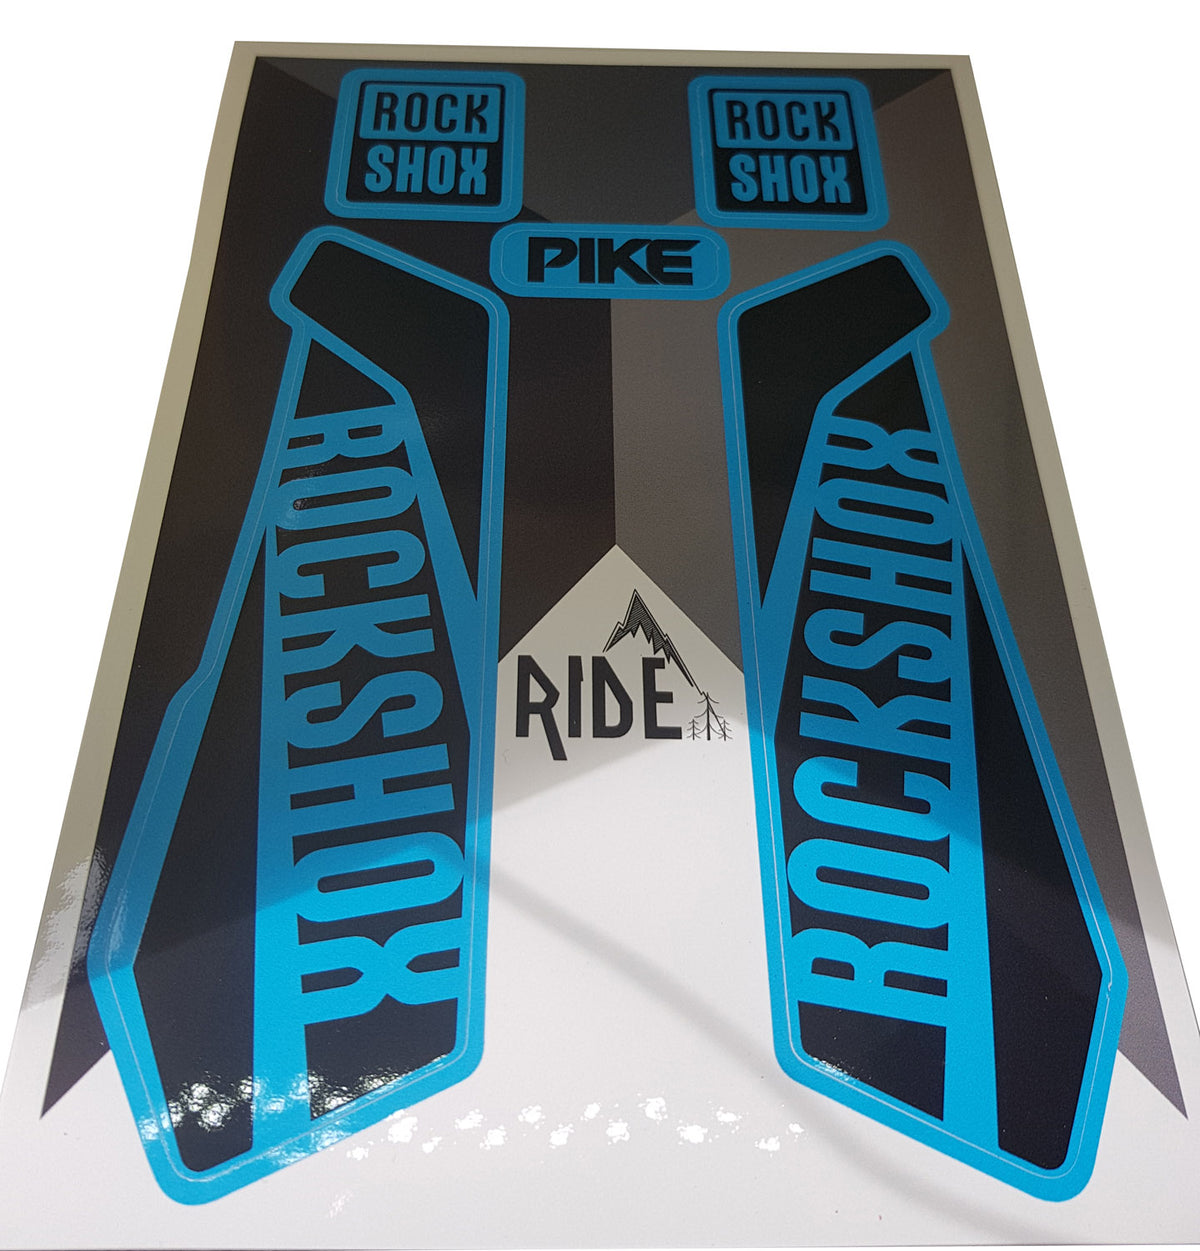 RockShox Pike 2016/2017 Blue Replica Decals.